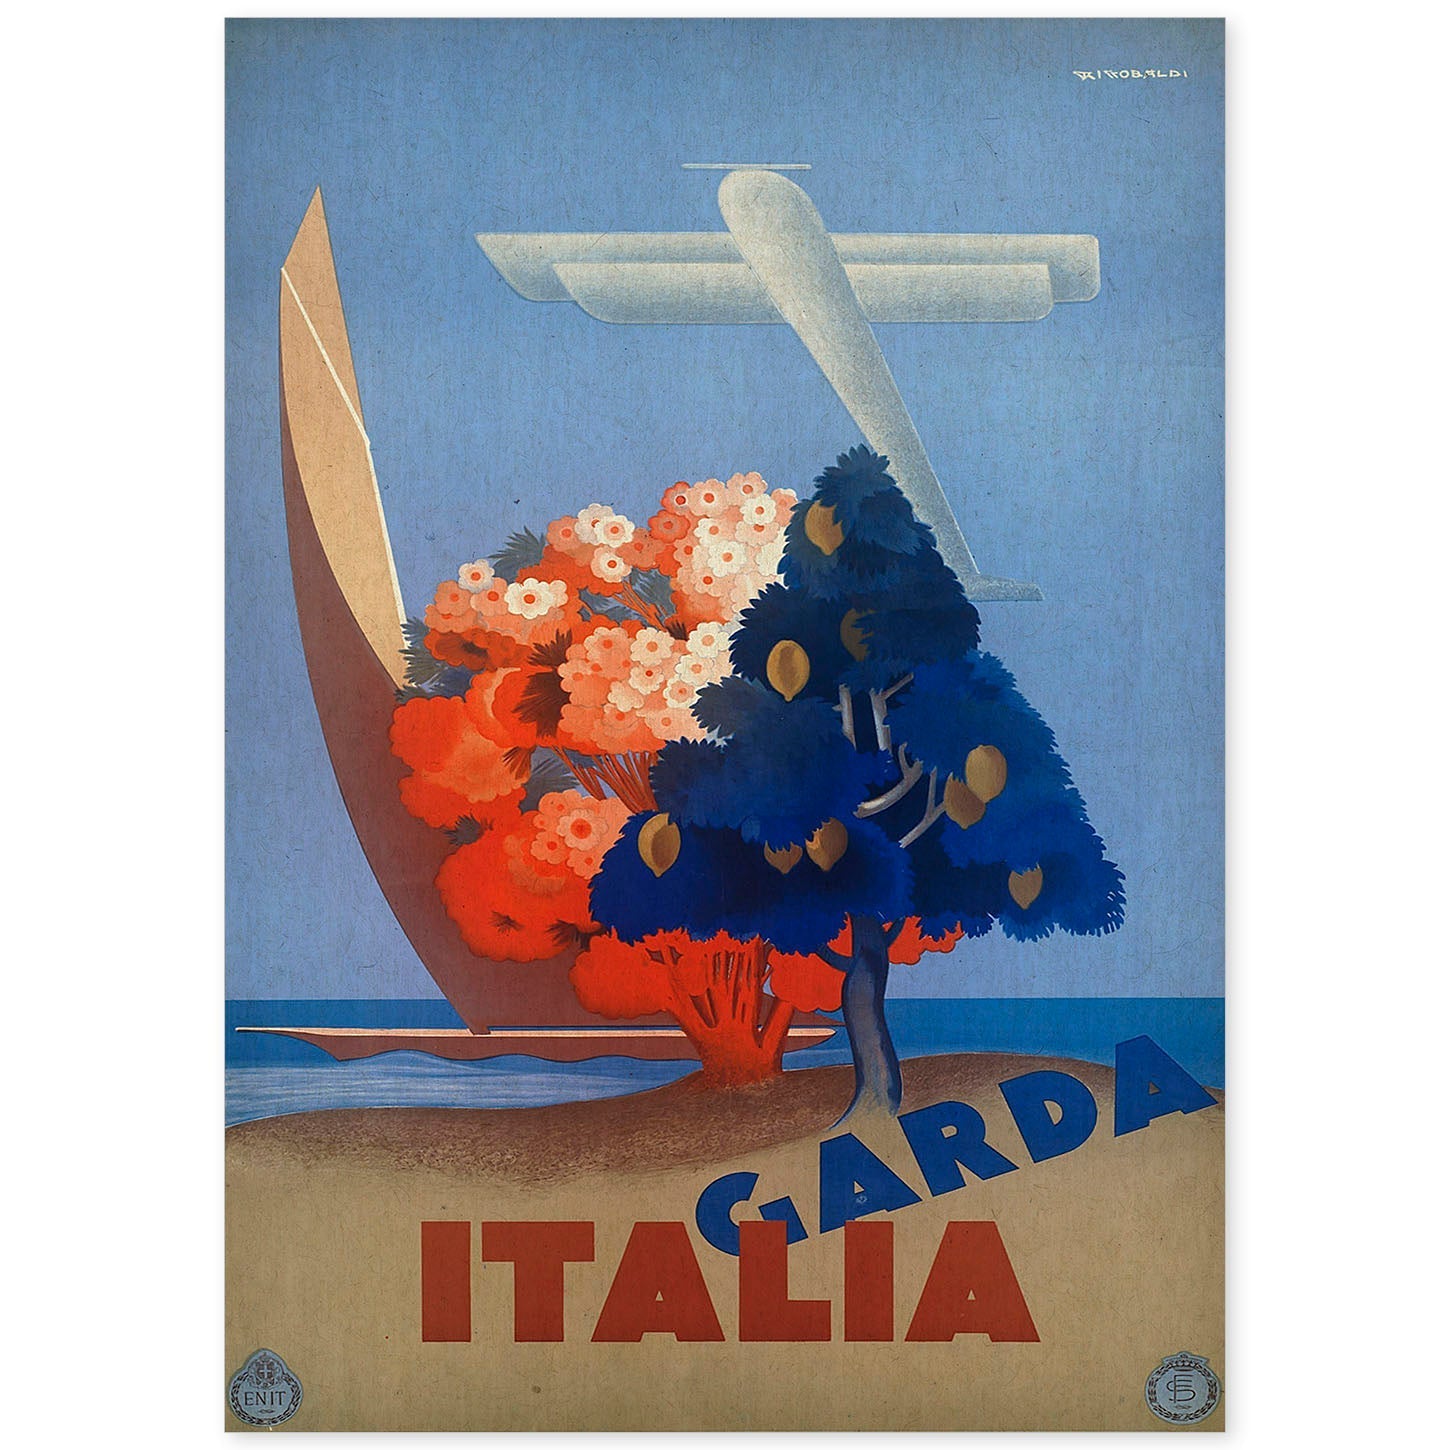 Poster vintage. Cartel vintage de Francia e Italia. Viaja a Grada.-Artwork-Nacnic-A4-Sin marco-Nacnic Estudio SL